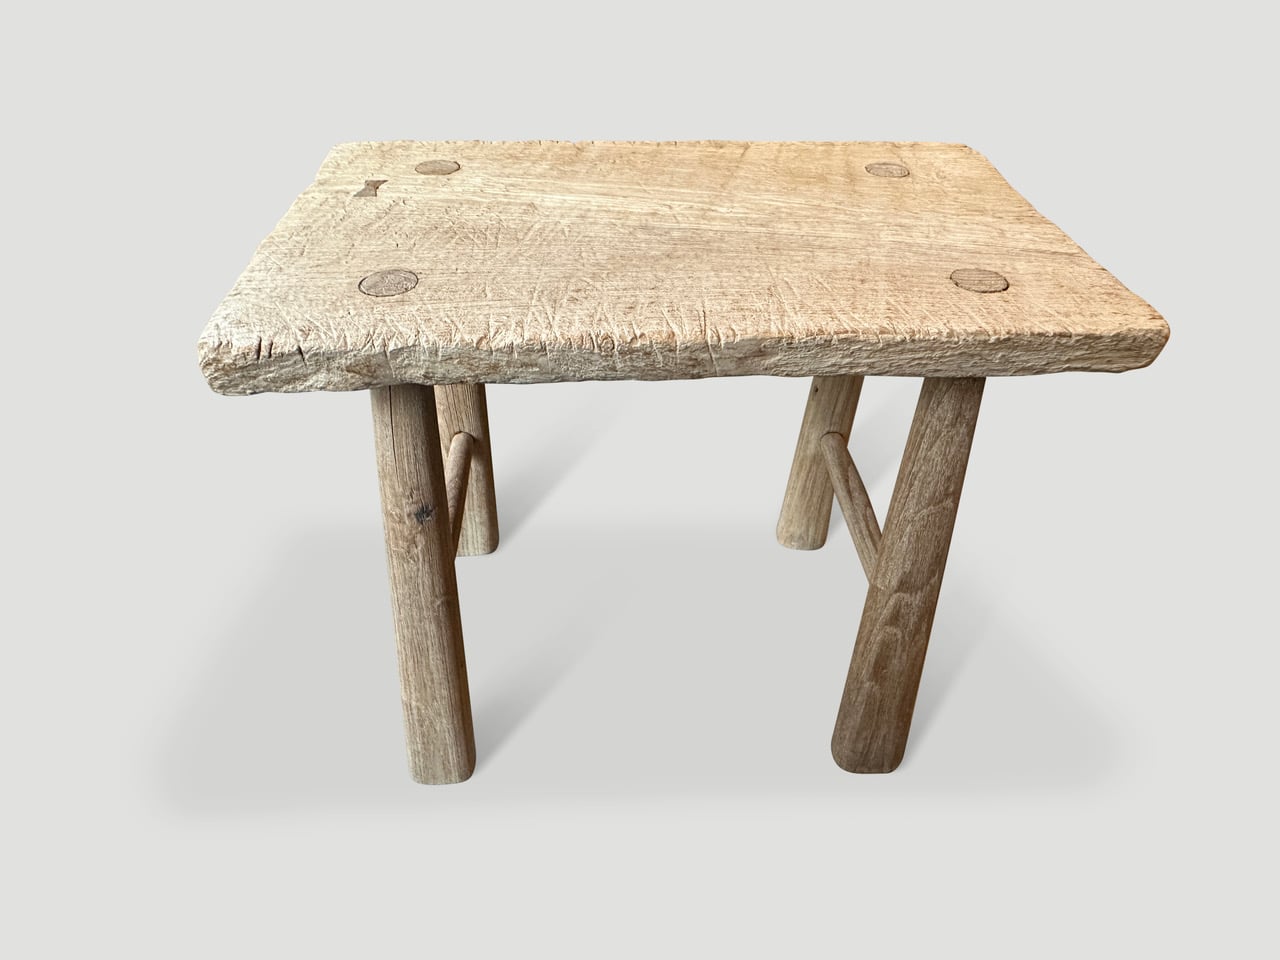 bleached teak wood stool or side table